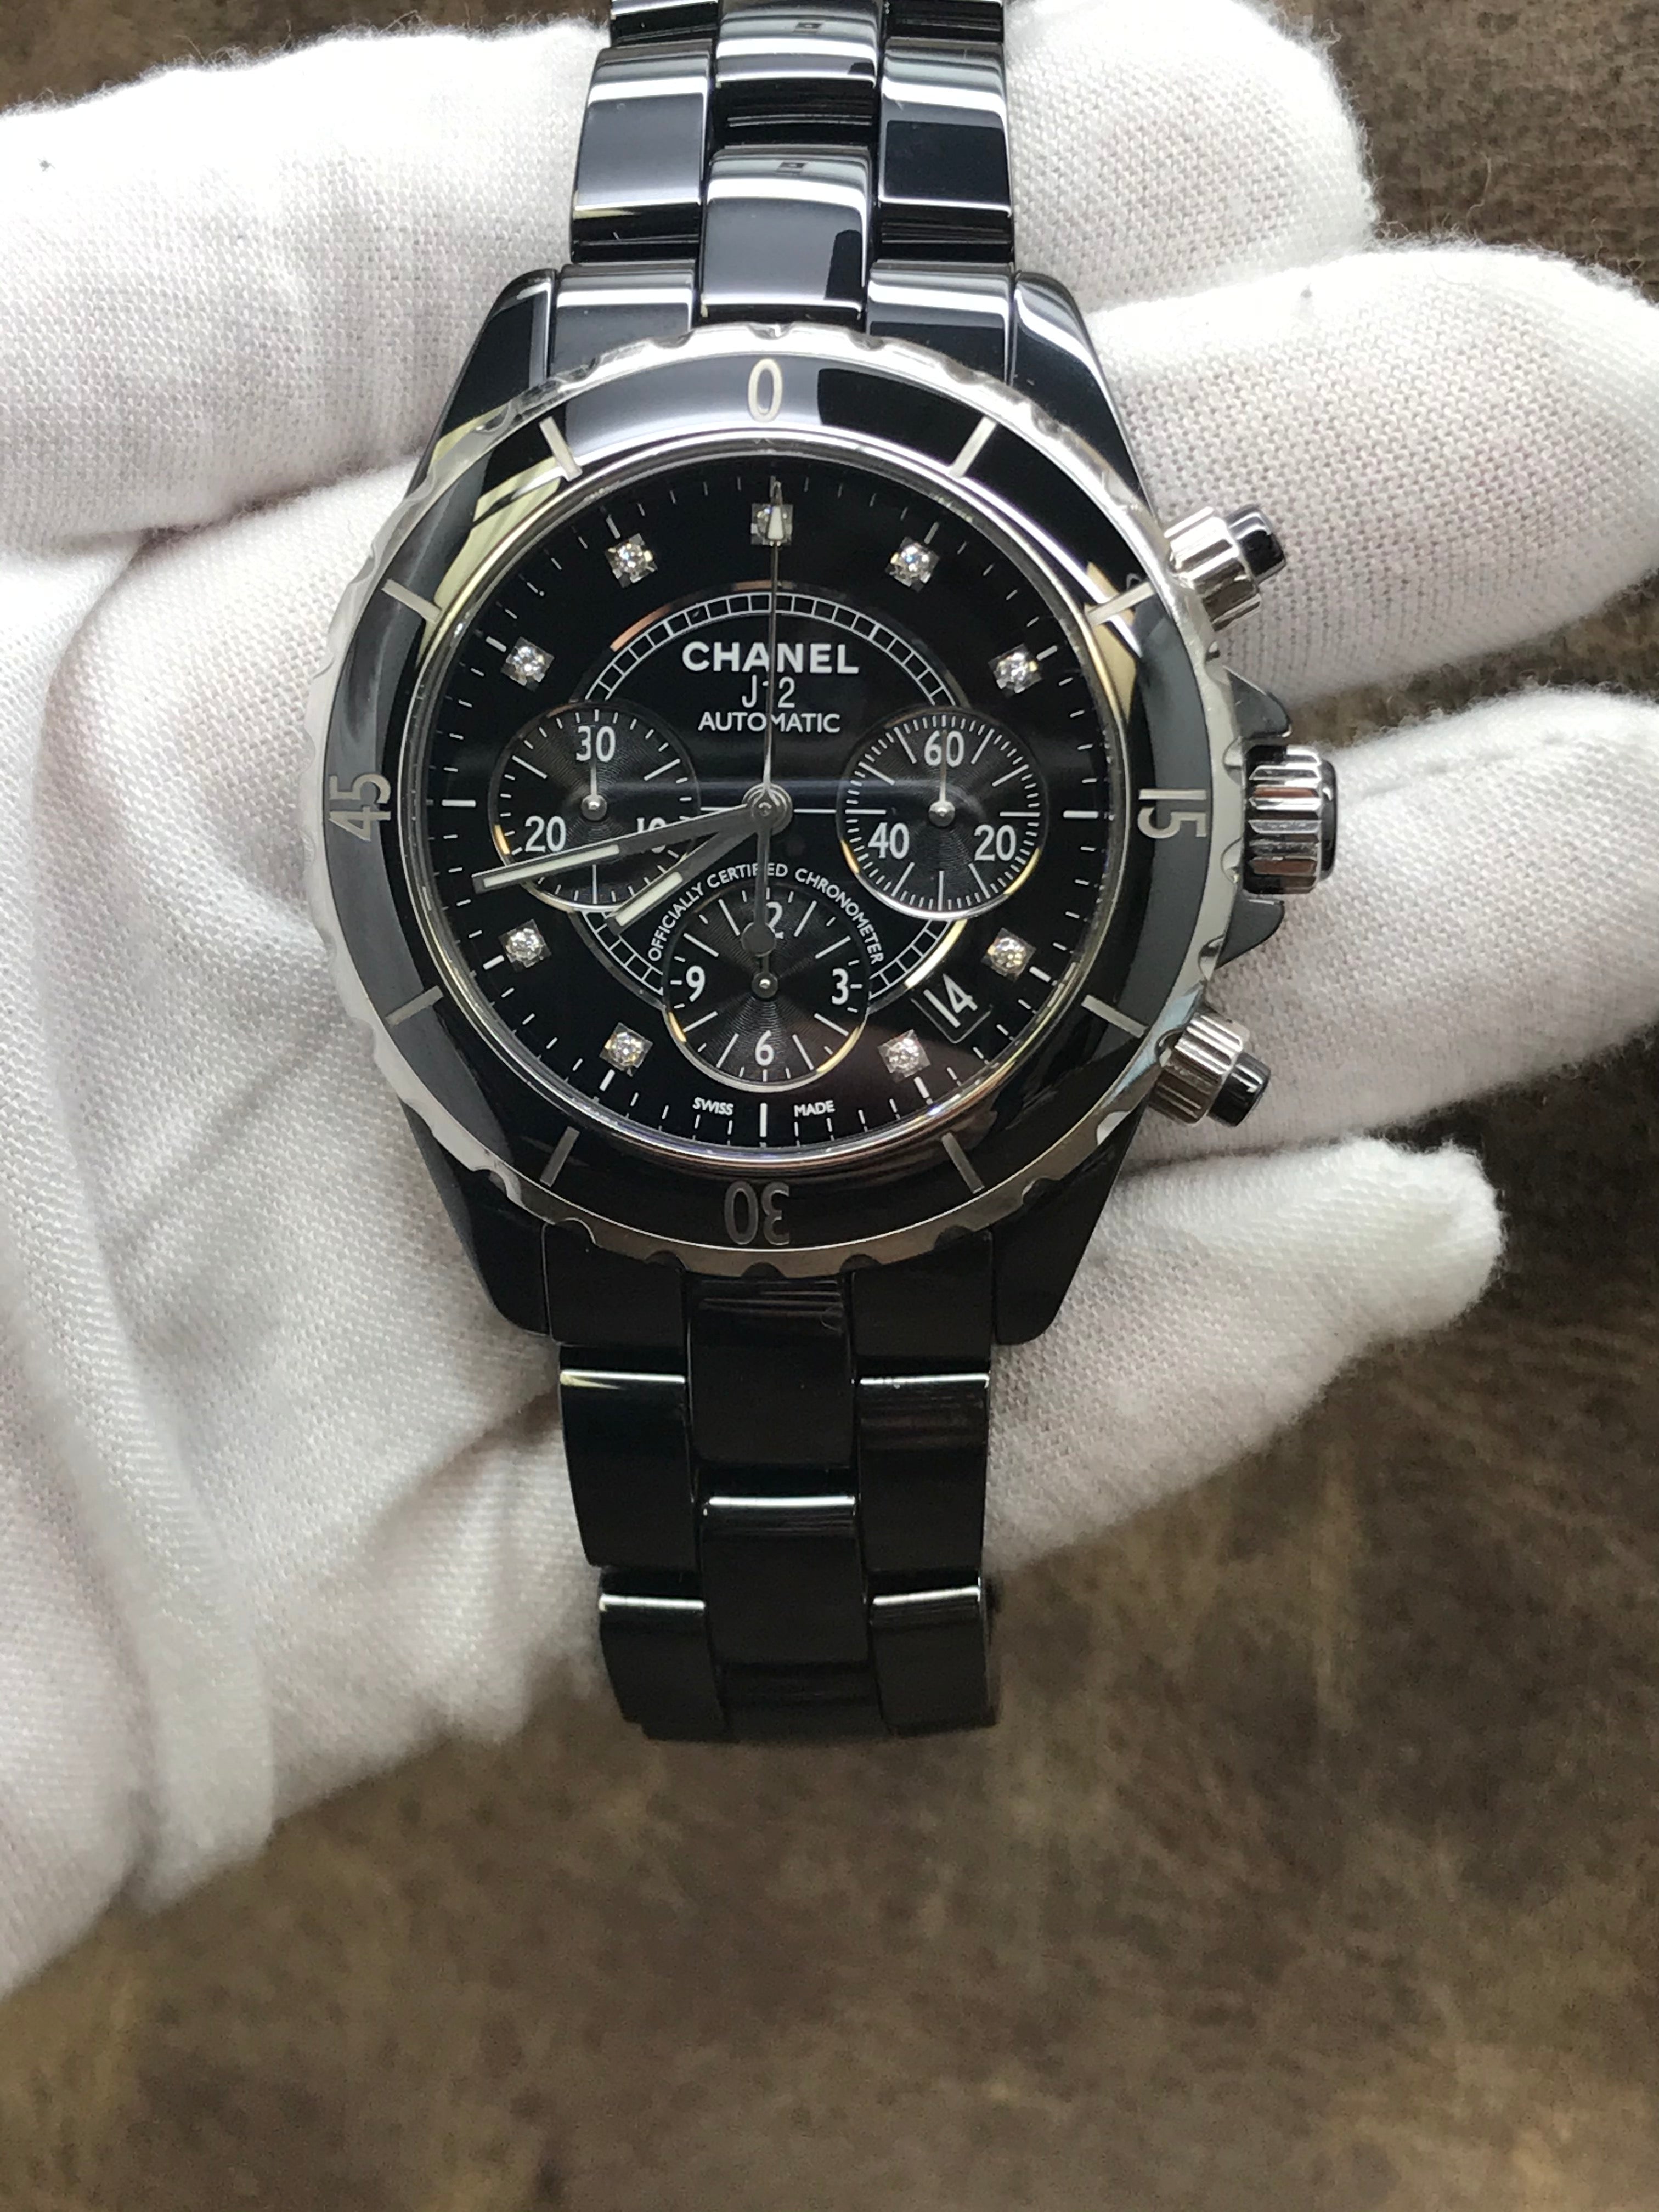 Chanel Watch J12 Chronograph Automatic Black Ceramic Mens 41mm Swiss Made